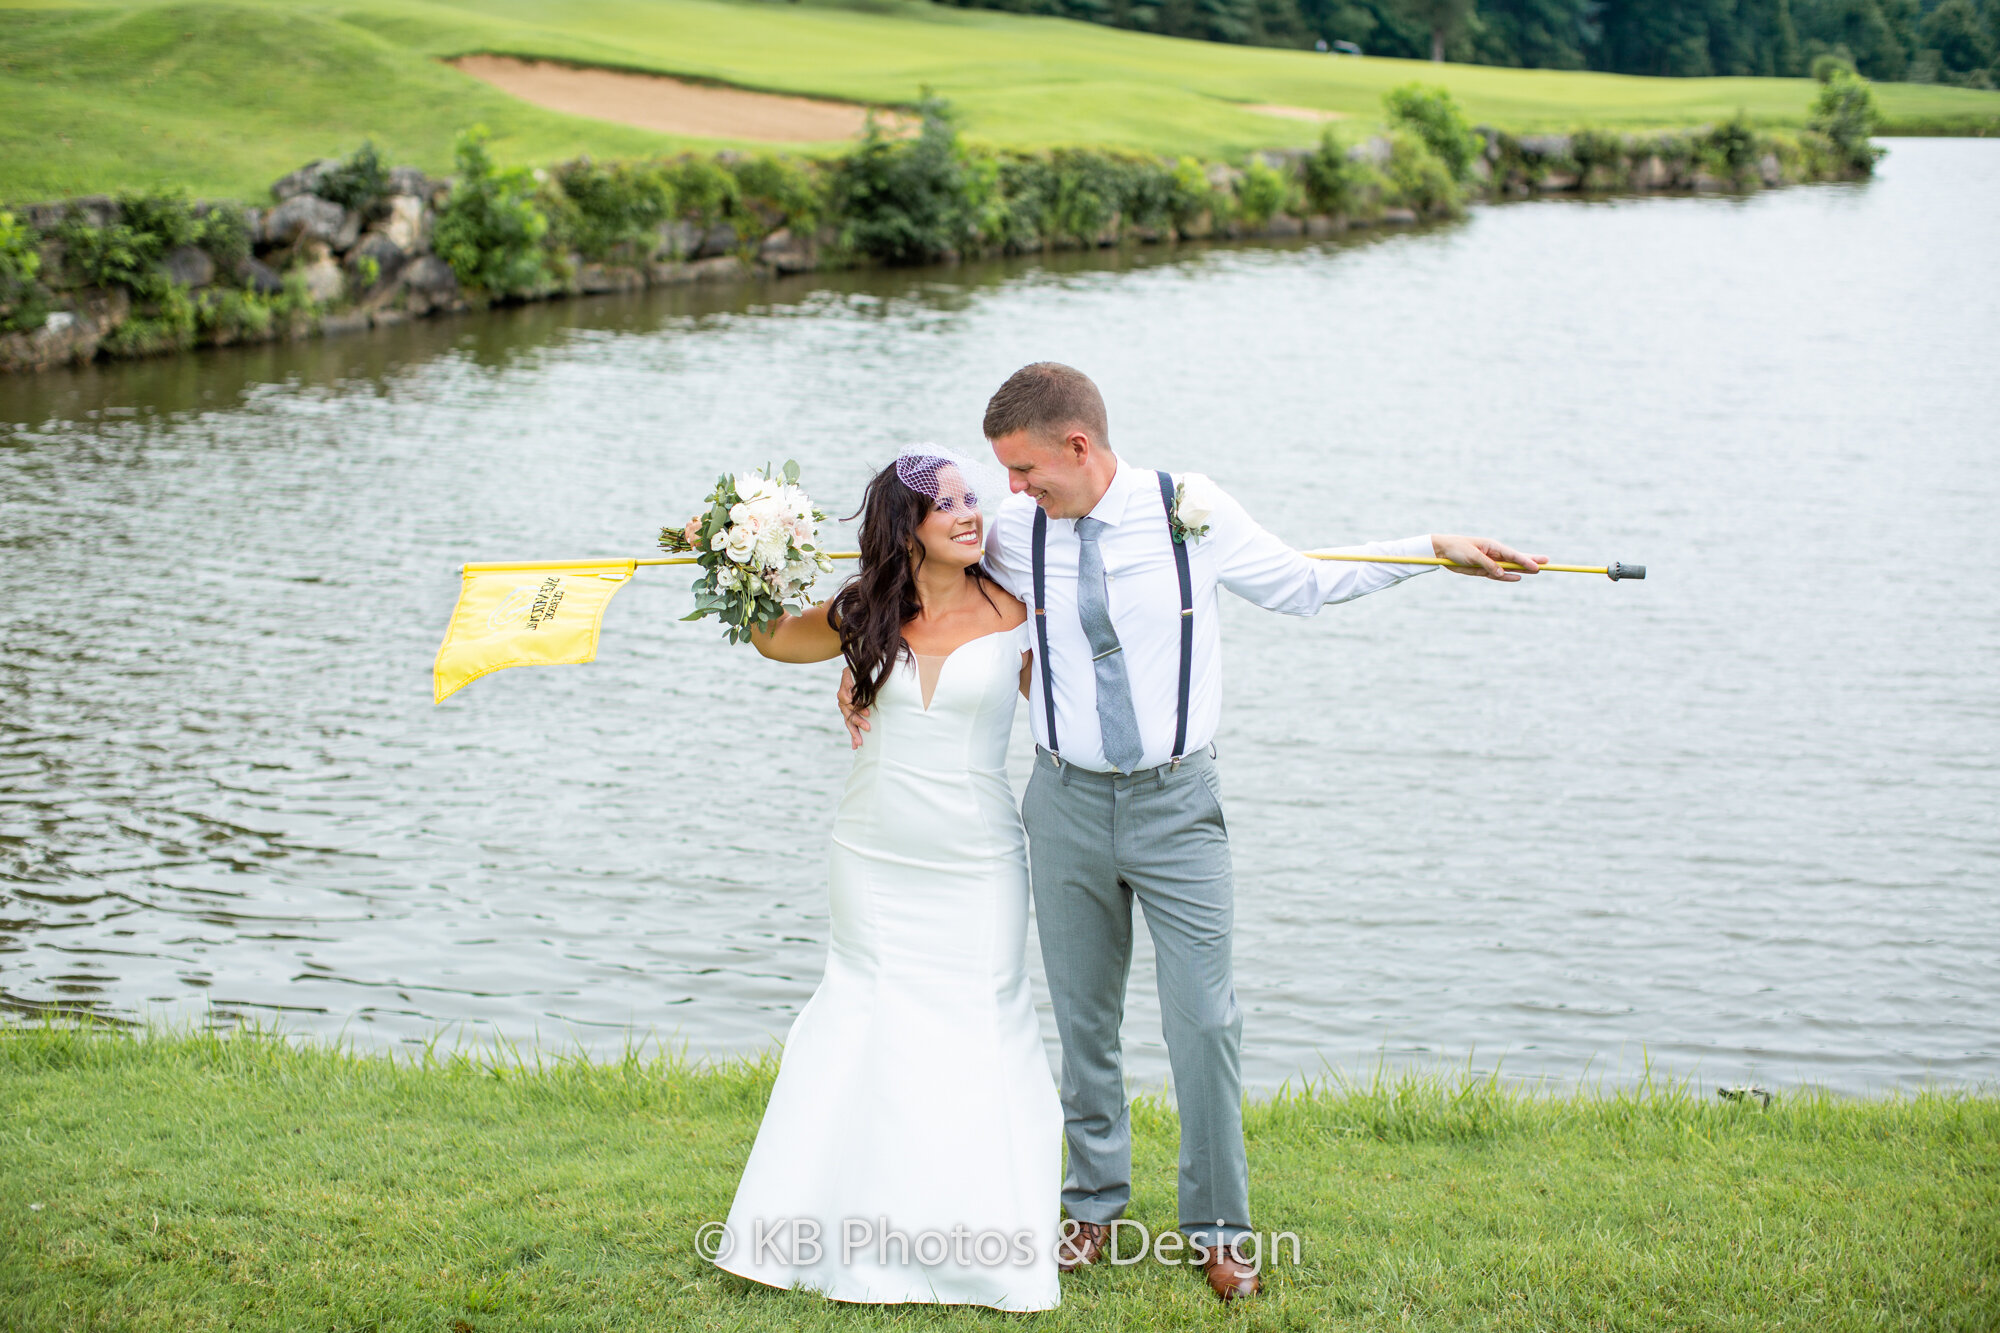 Wedding-Photography-Ryan-Molly-Osage-National-Golf-Course-Lake-of-the-Ozarks-Missouri-photographer-KB-Photos-and-Design-wedding-255.JPG